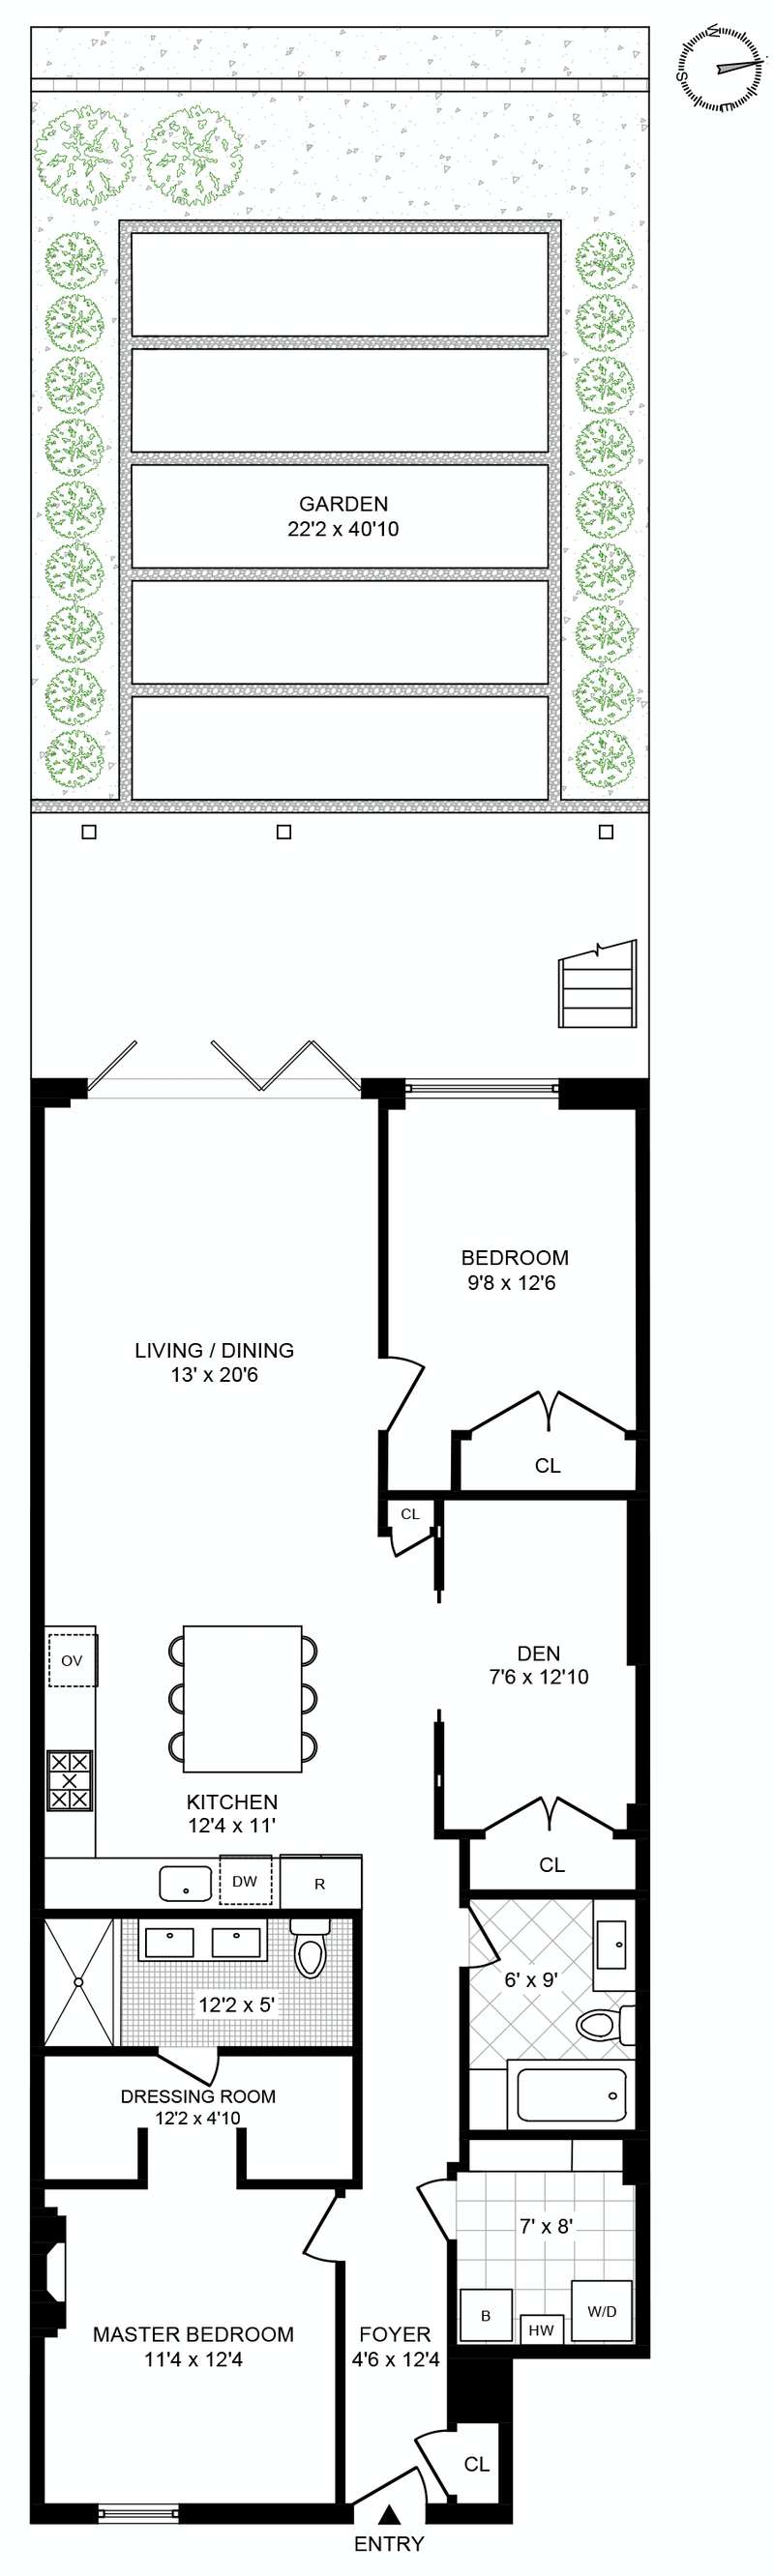 Floorplan for 728 Bloomfield Street, 1